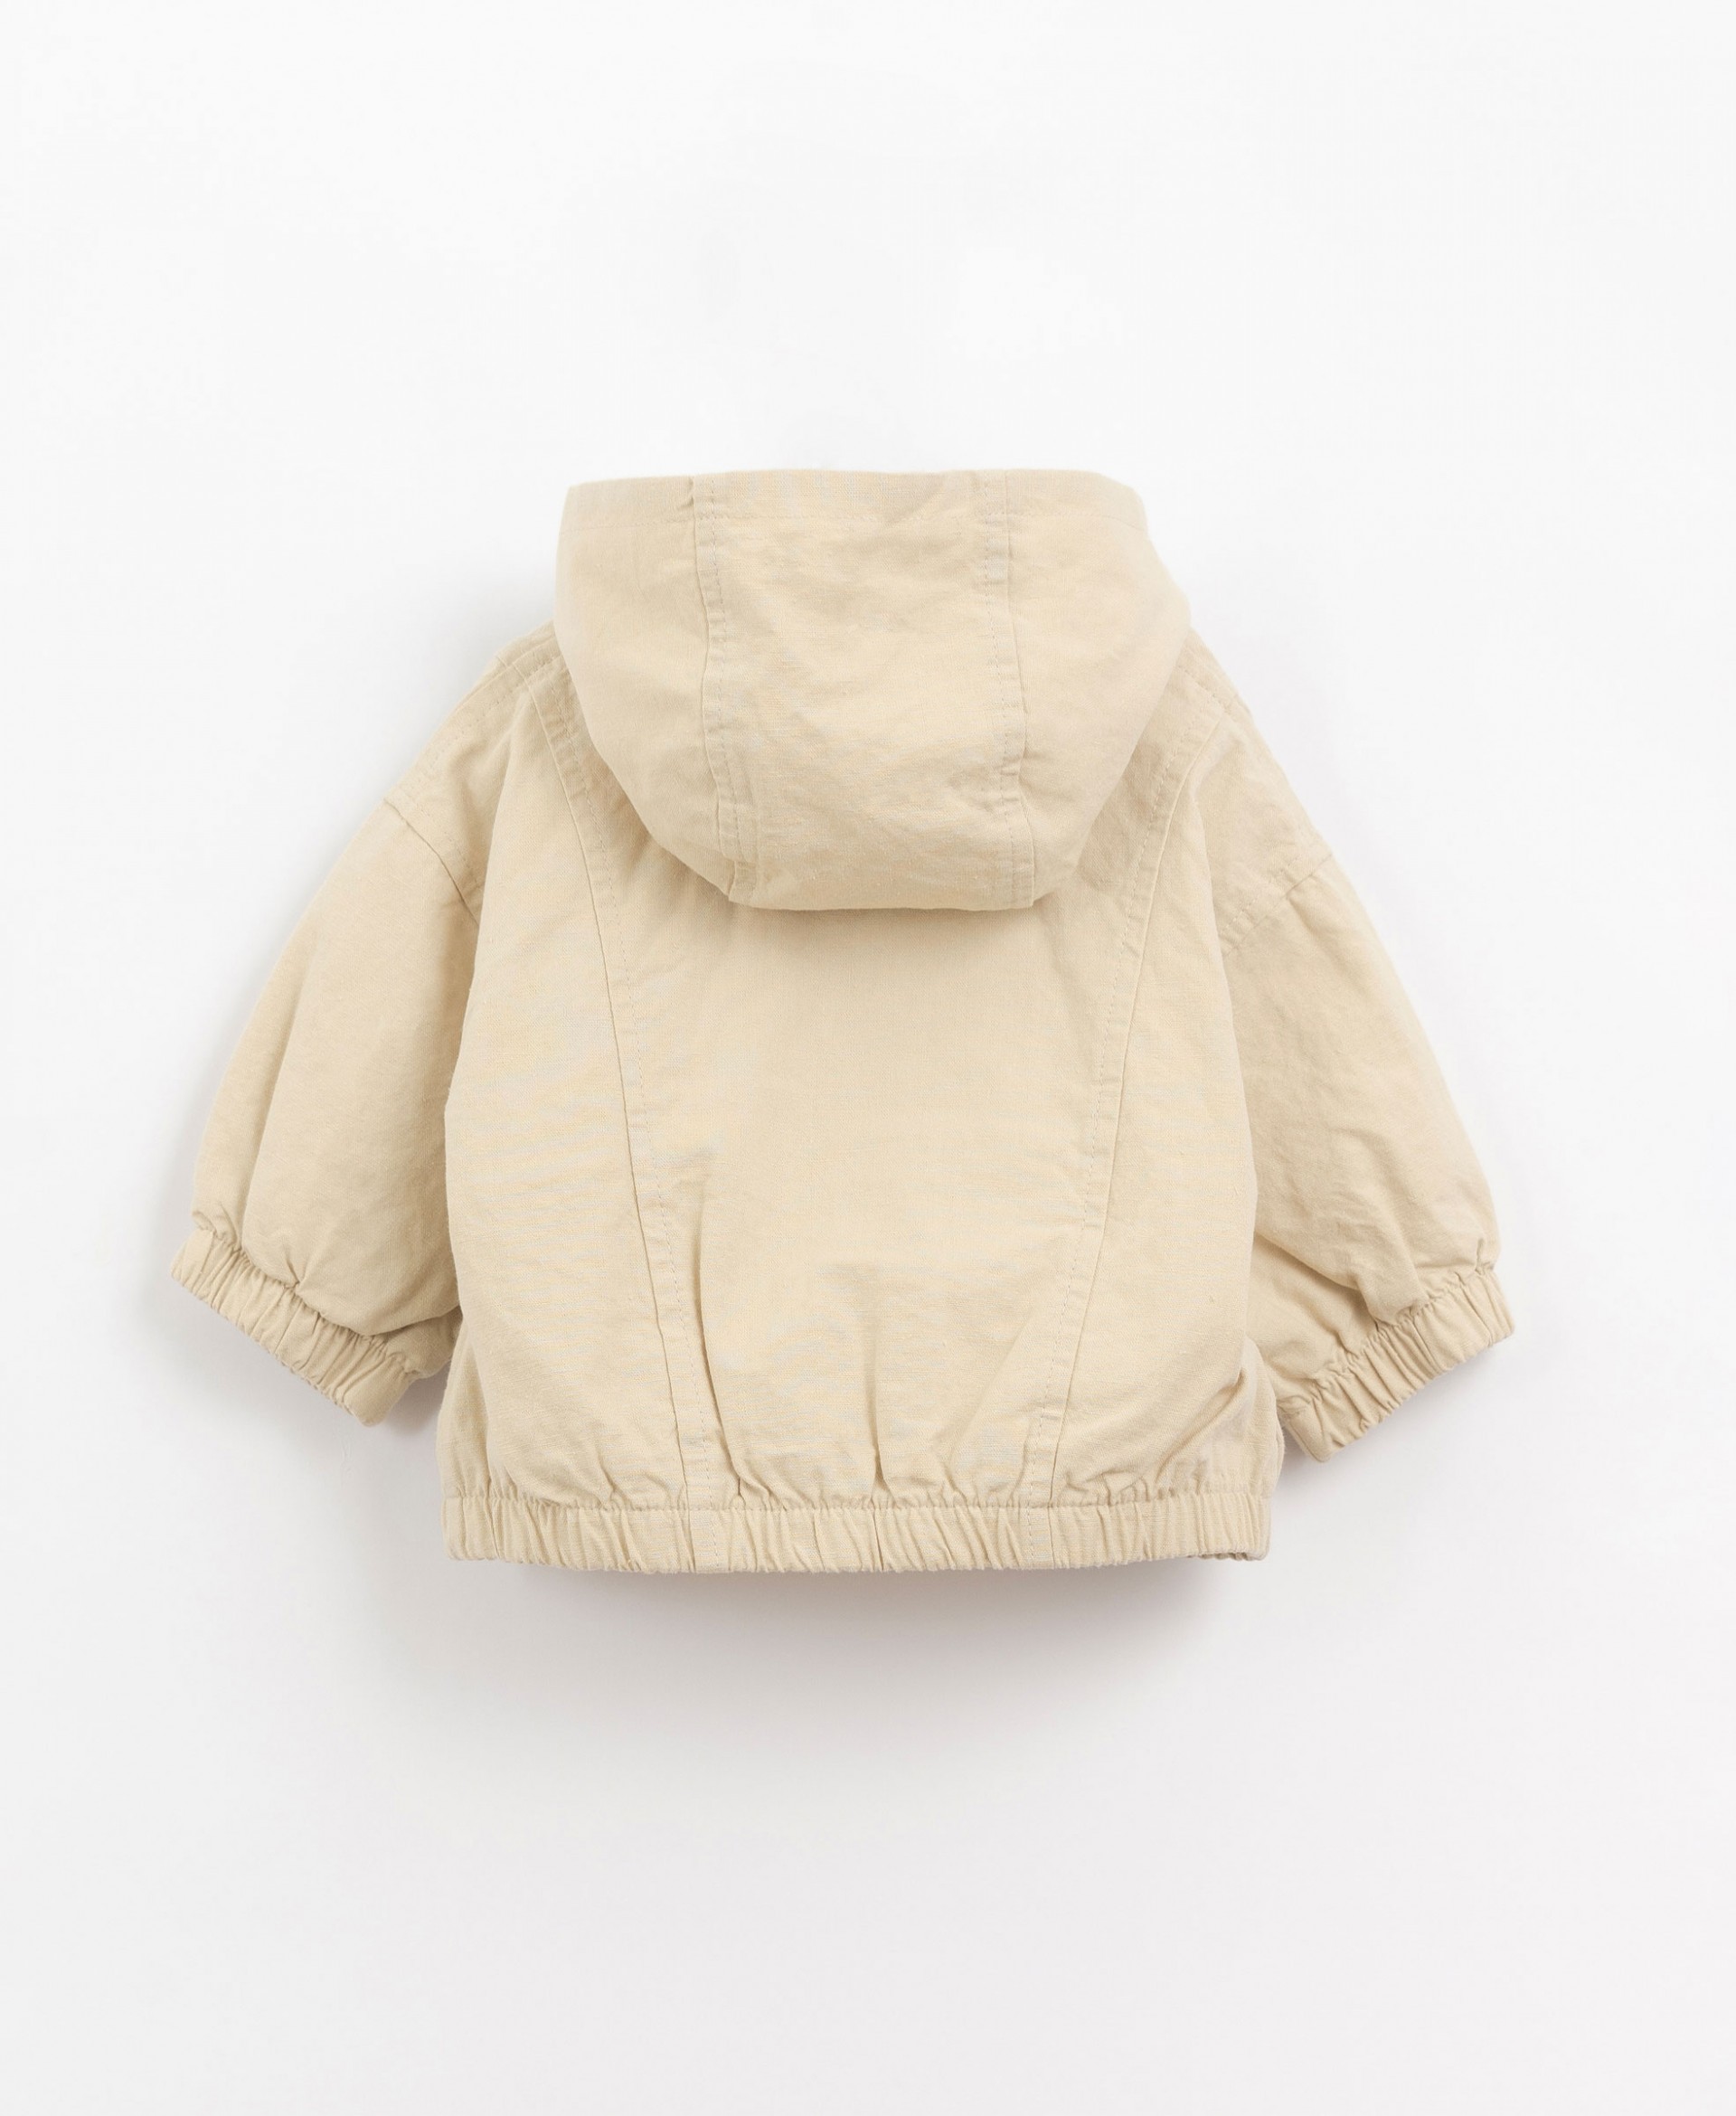 Organic cotton jacket with serge lining | Organic Care